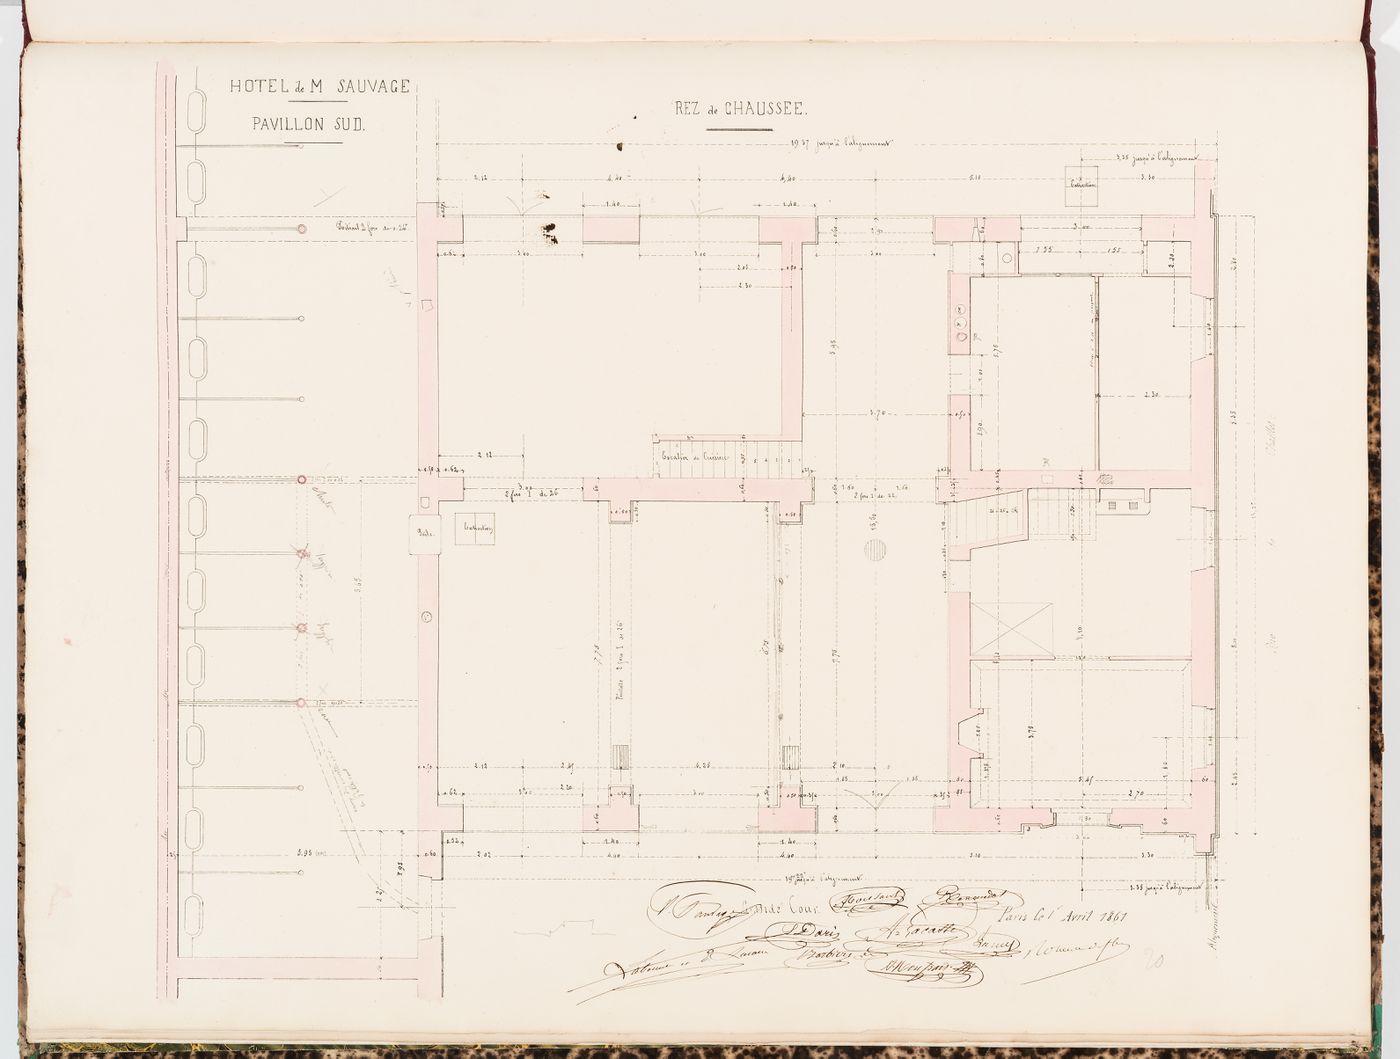 Ground floor plan for the "pavillon sud" for Hôtel Sauvage, Paris